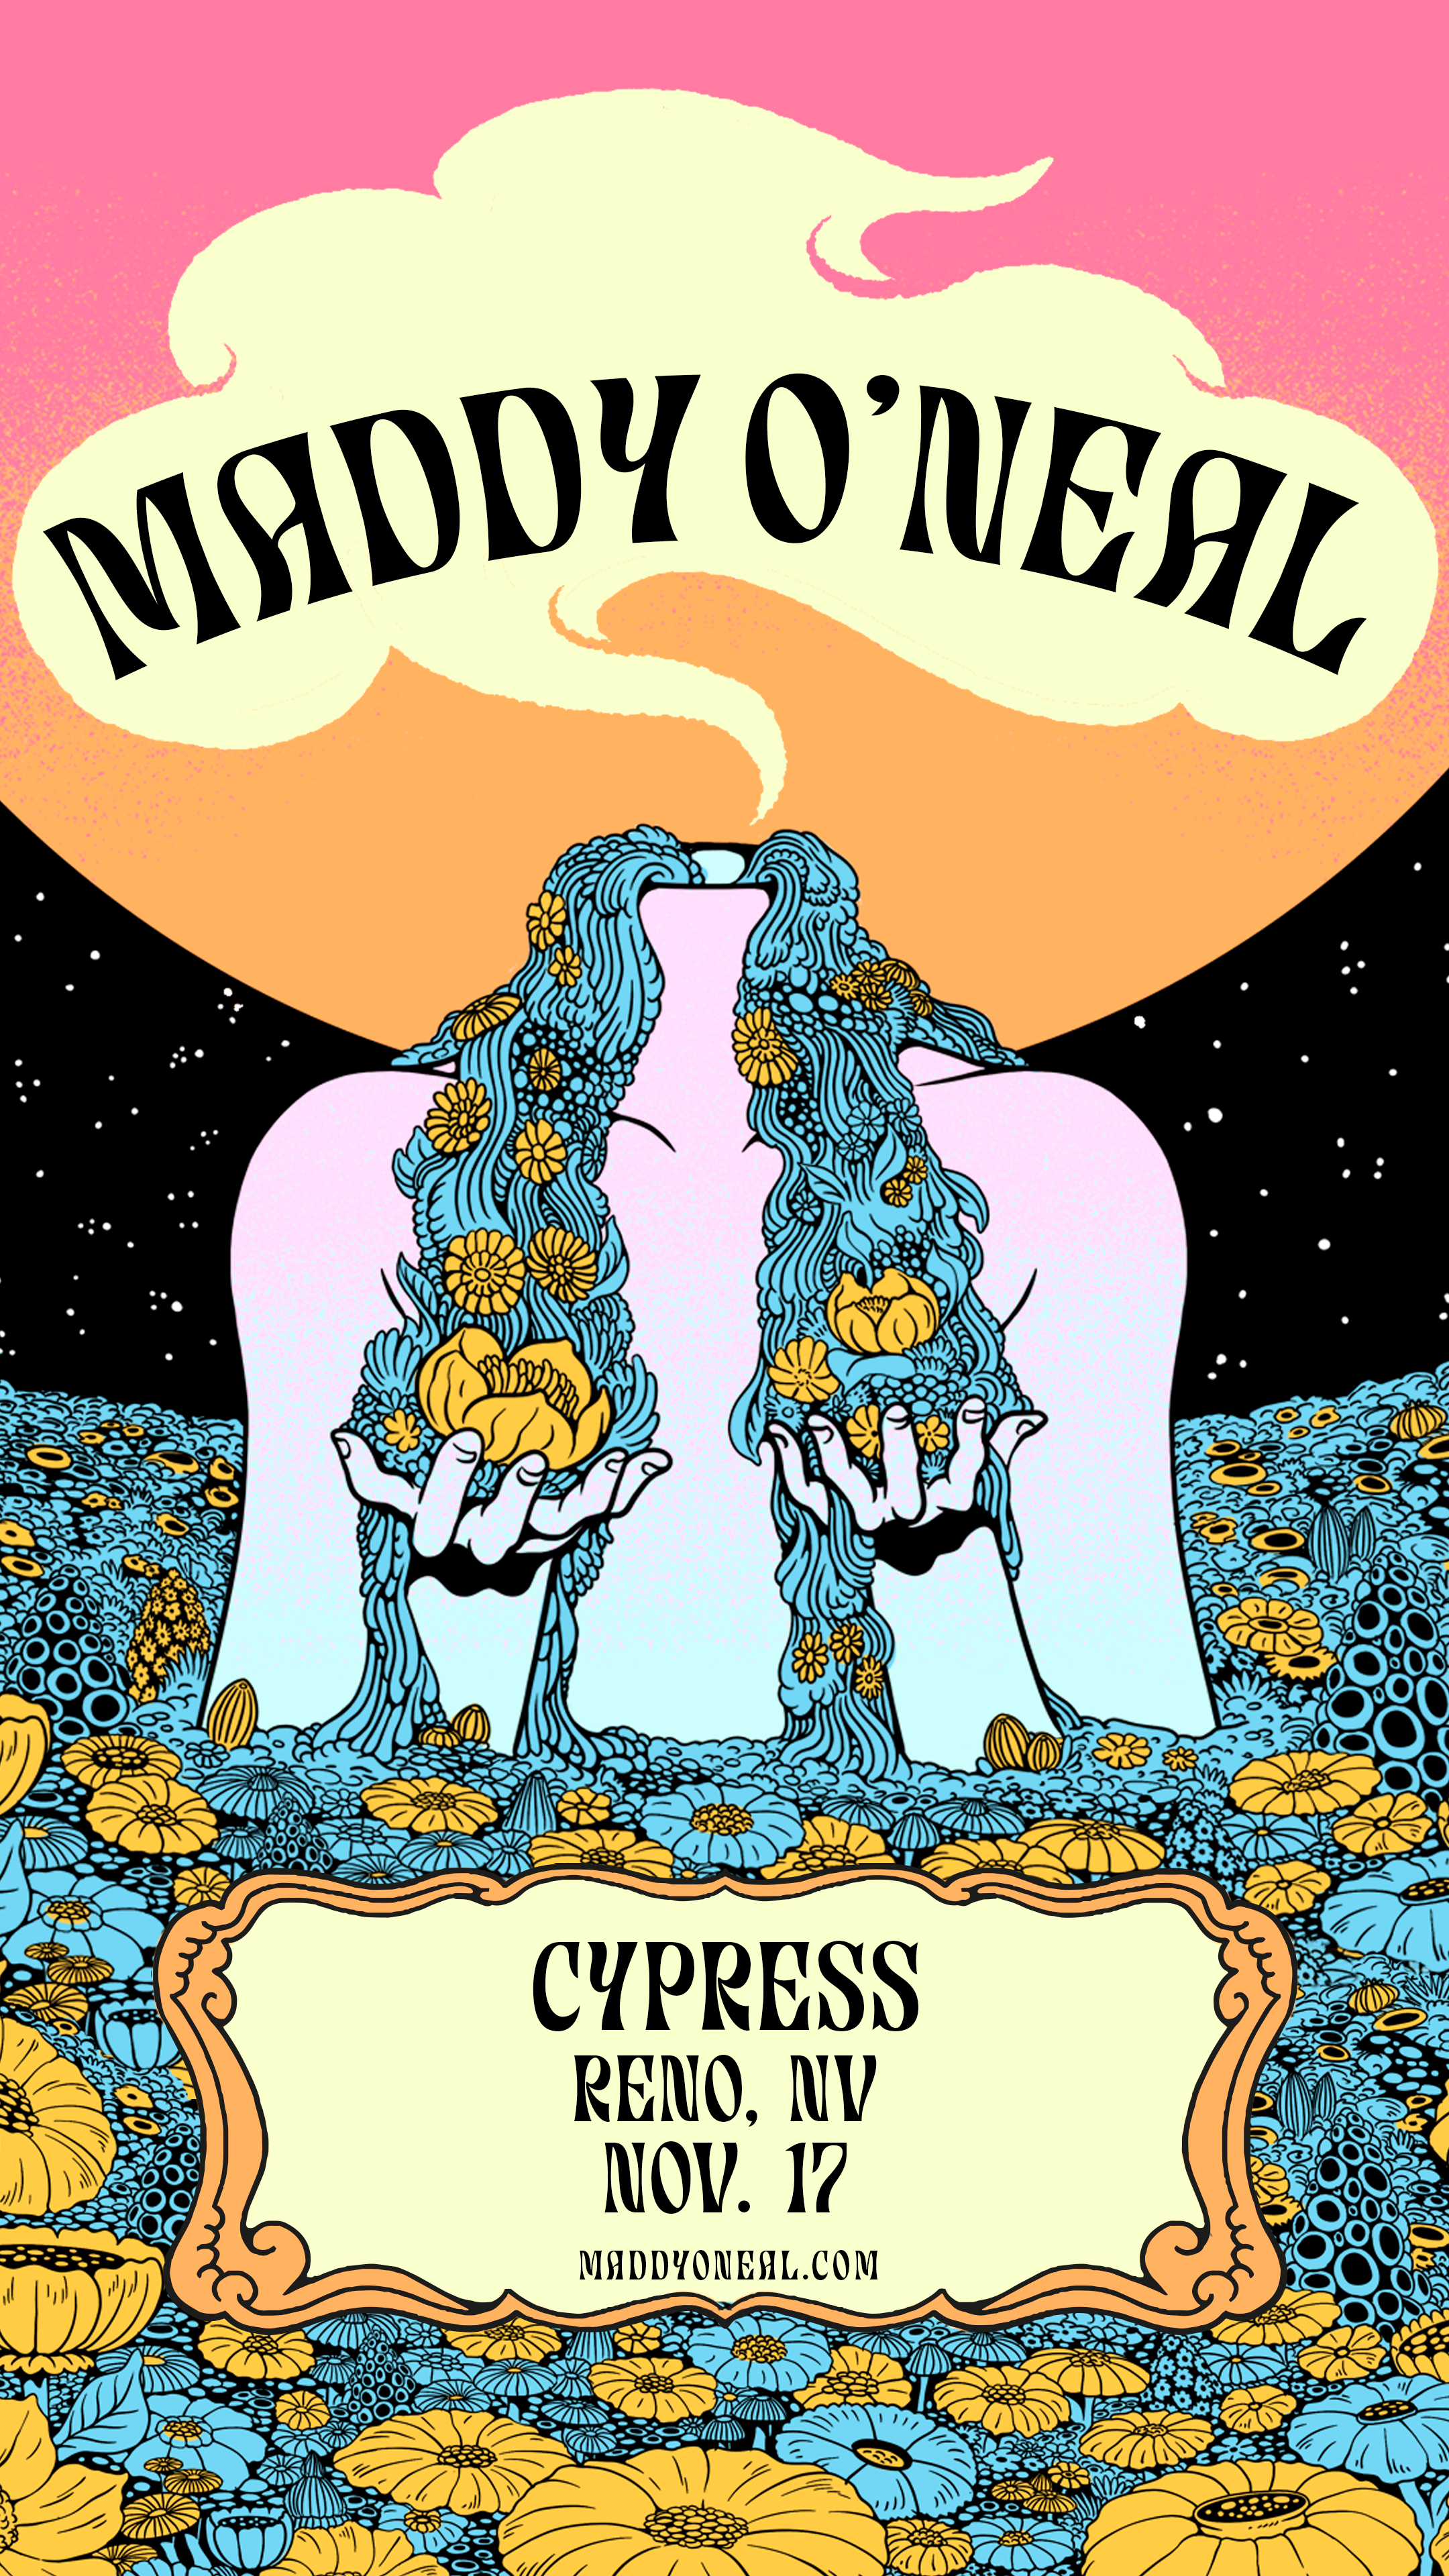 Maddy O'Neal and Kaipora perform at Cypress on November 17, 2023